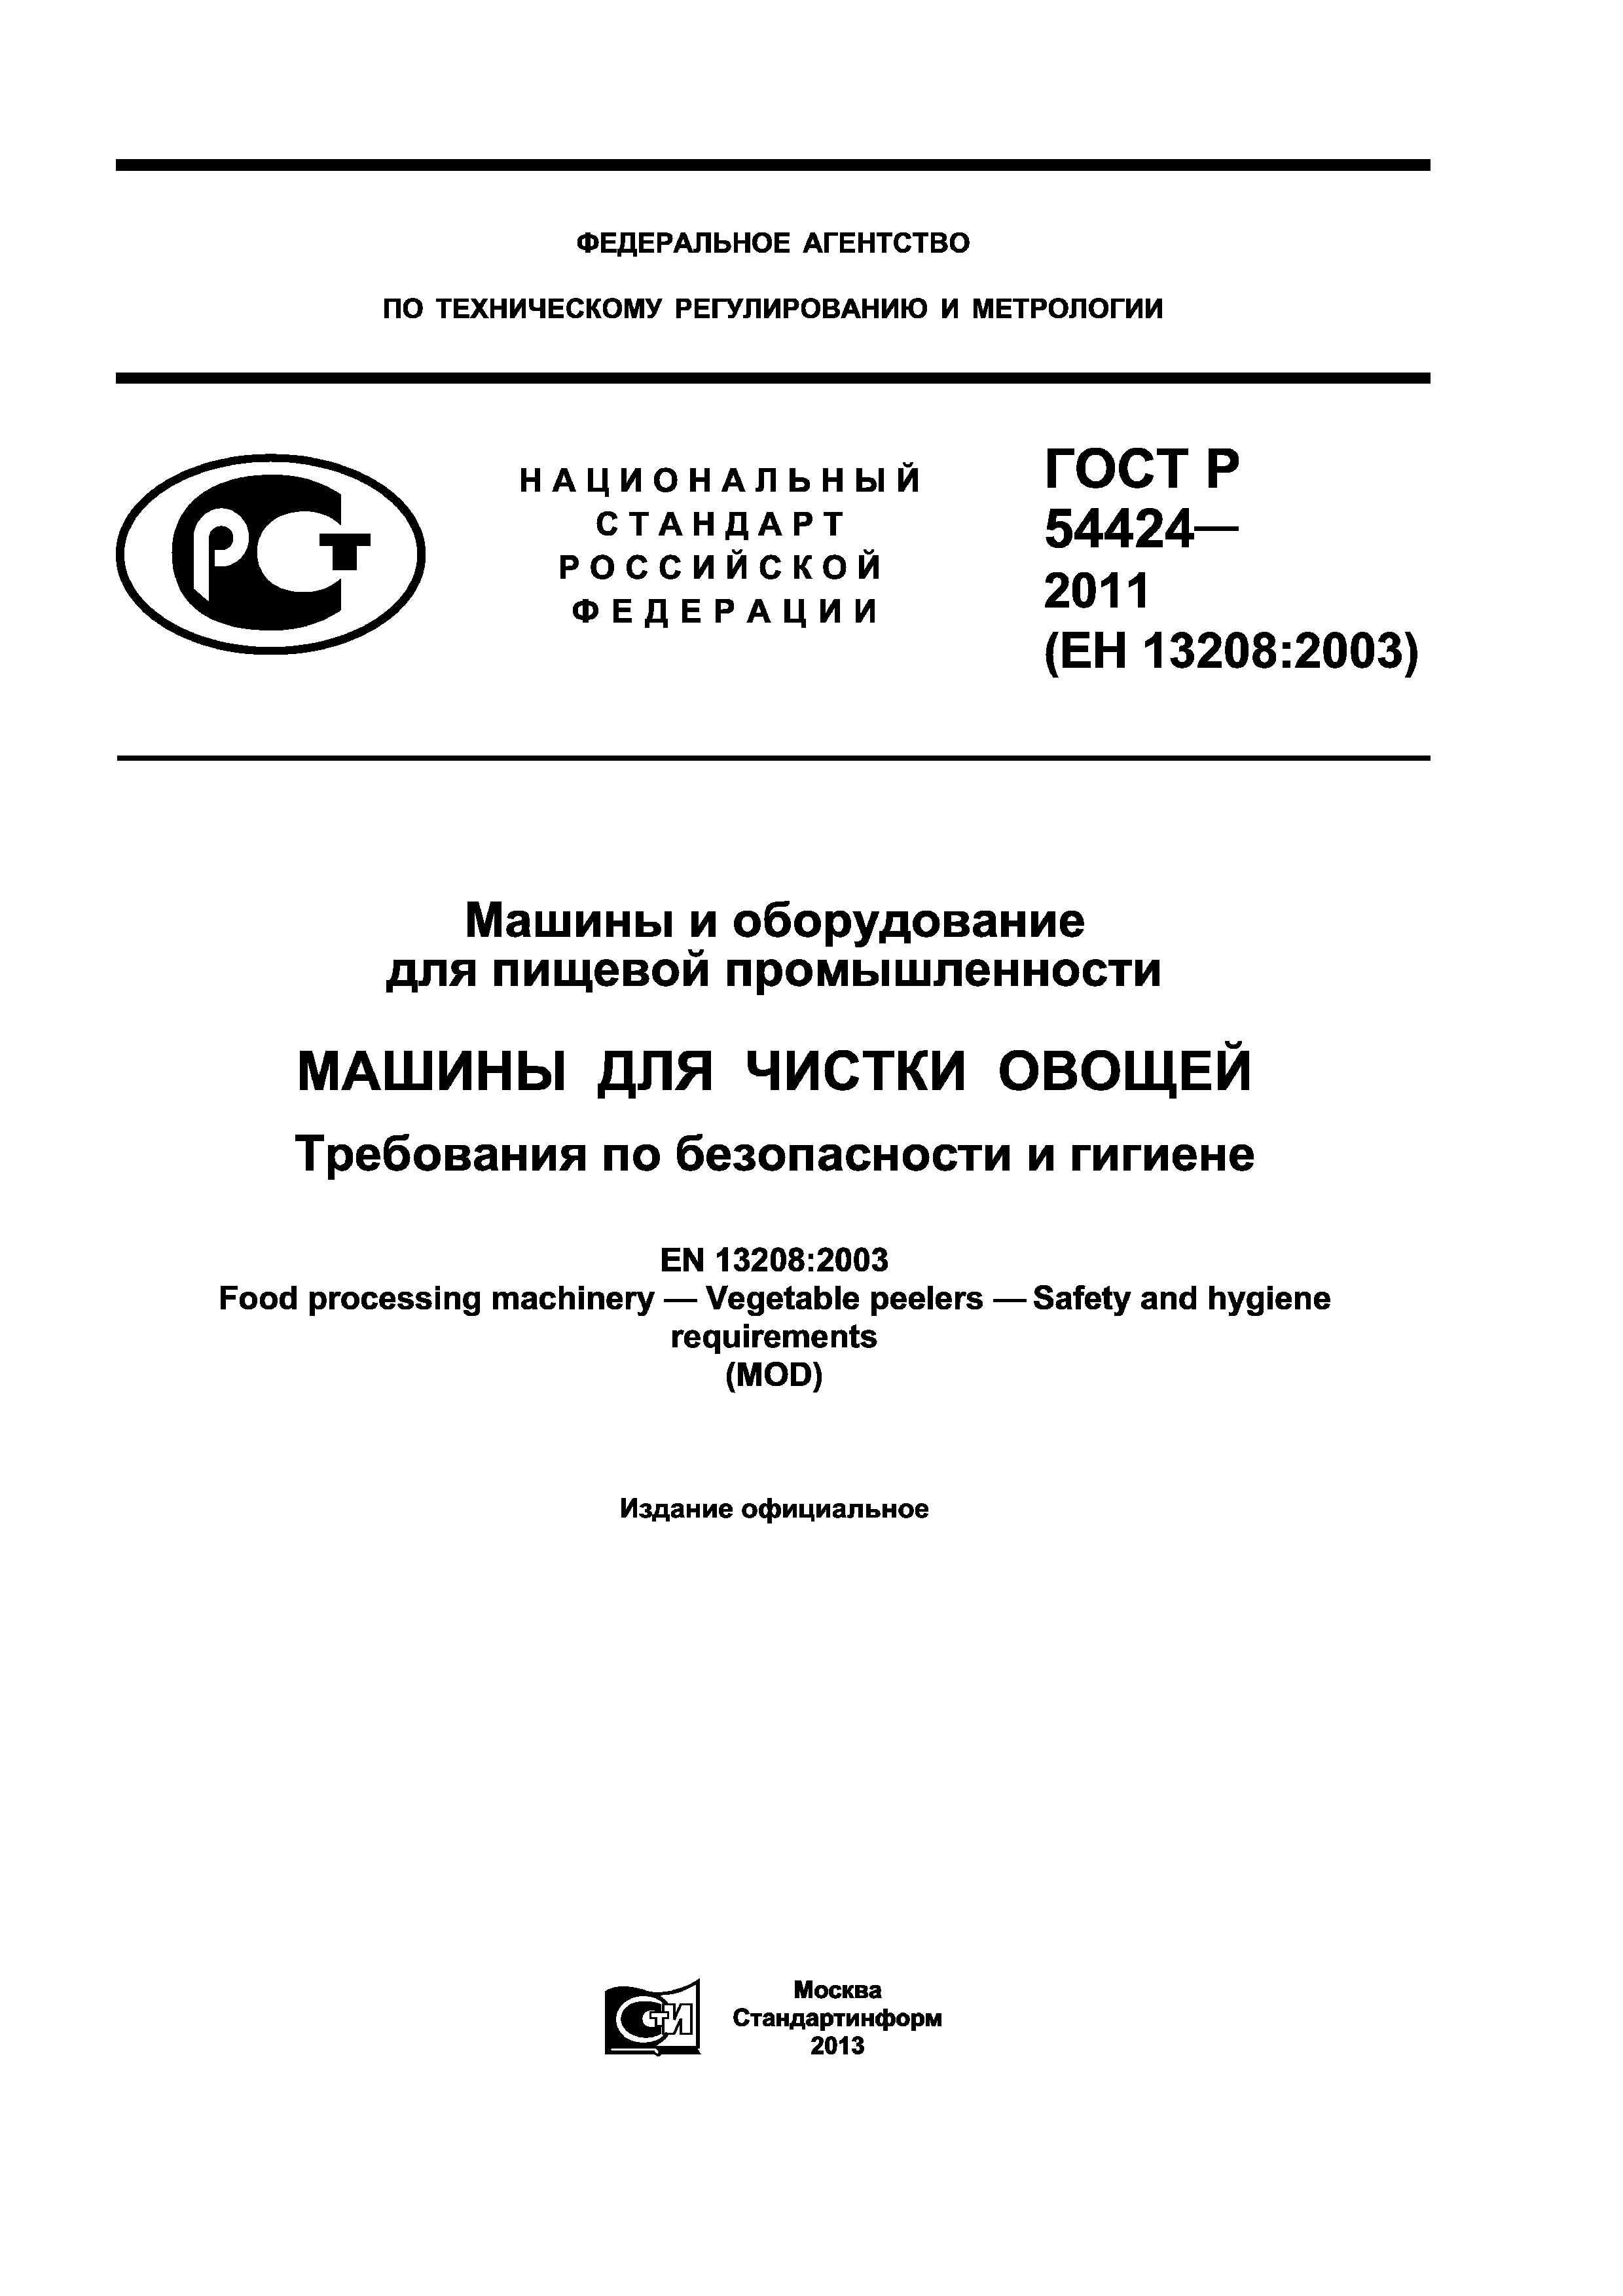 ГОСТ Р 54424-2011